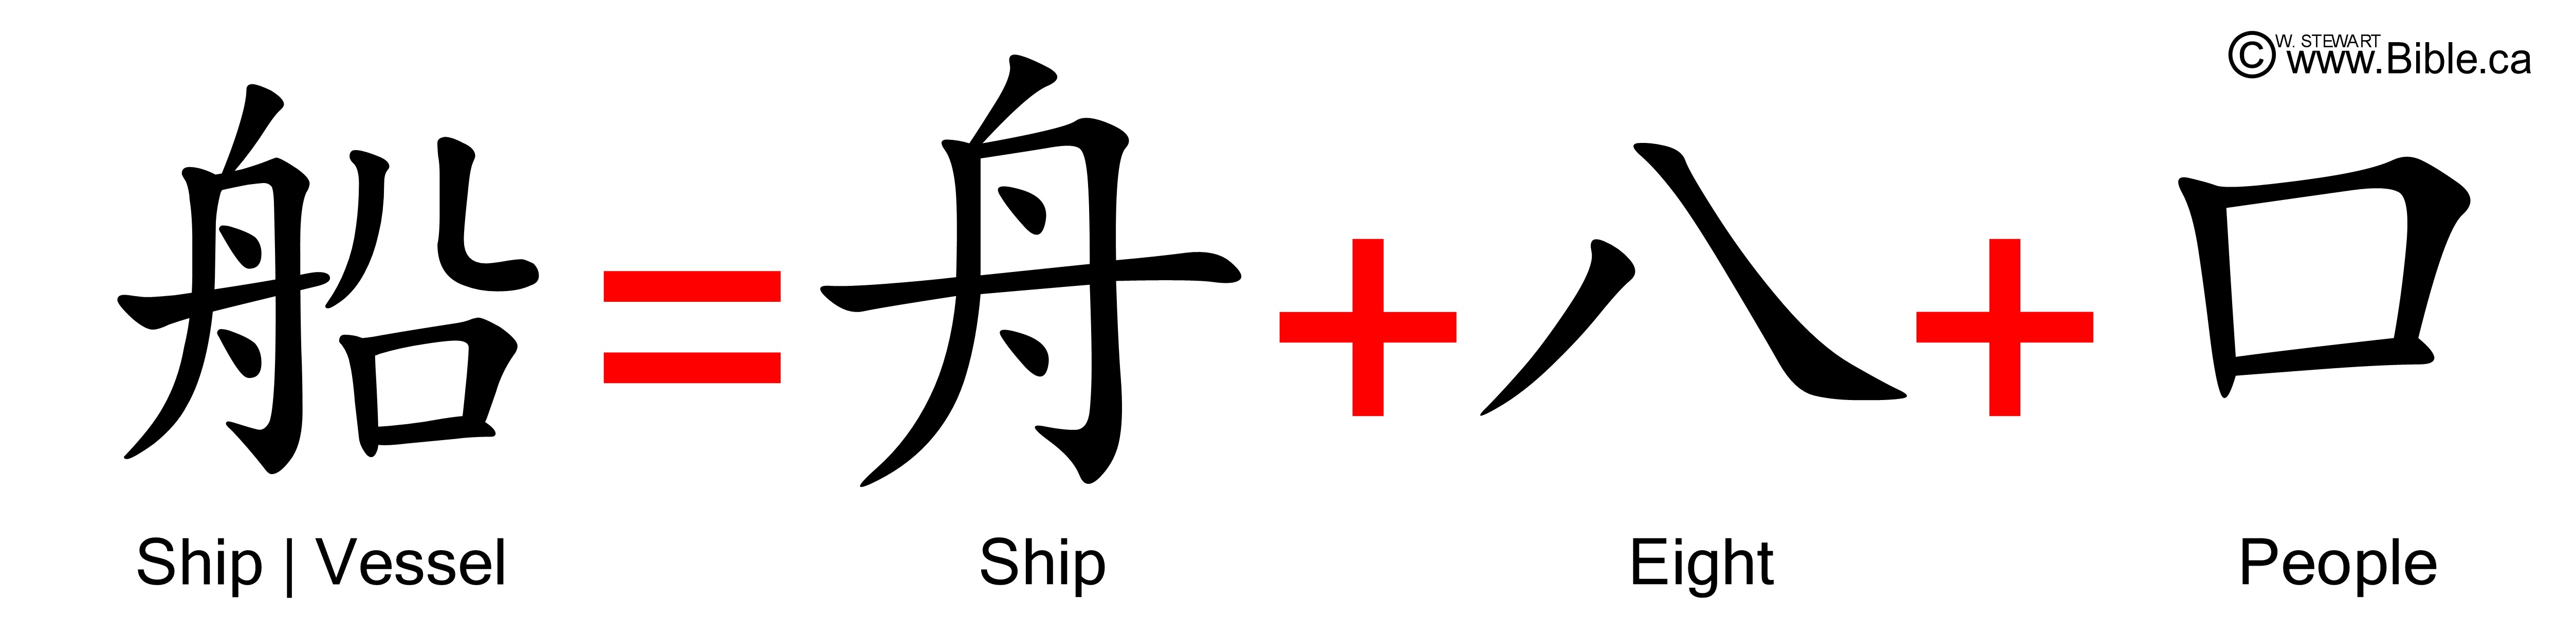 bible-evidences-chinese-language-characters-words-noah-flood-genesis-6-14-18-chuan-vessel-ship-boat-eight-people.jpg